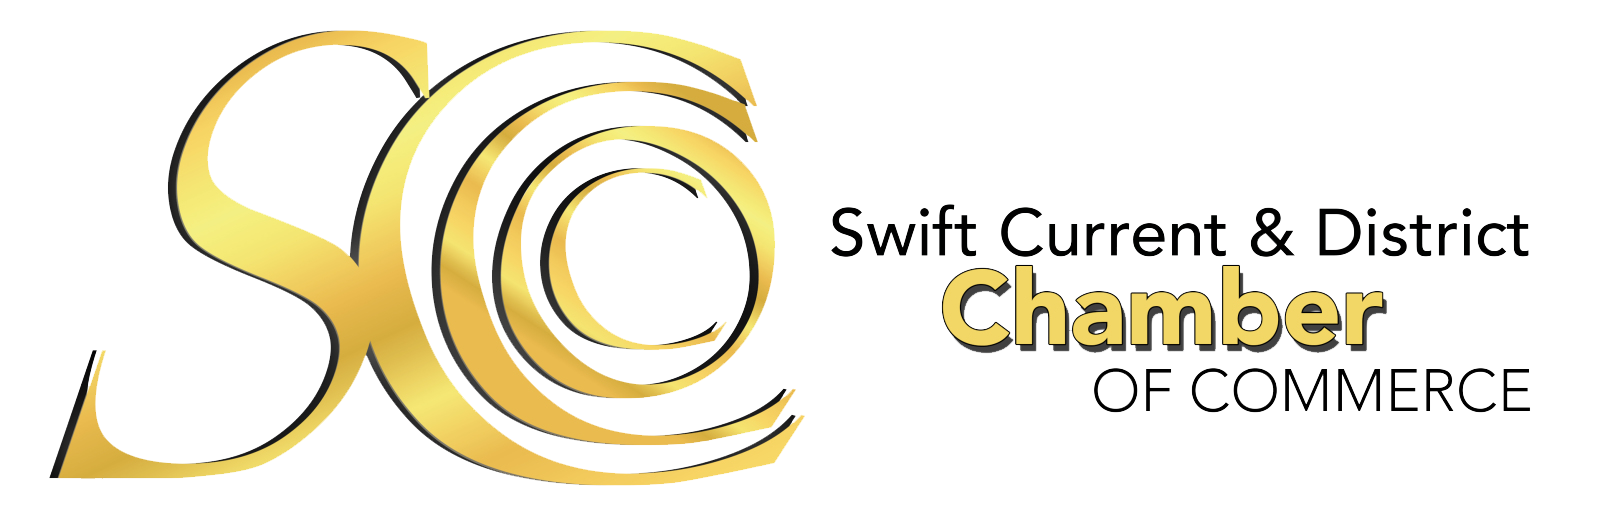 Swift Current Chamber